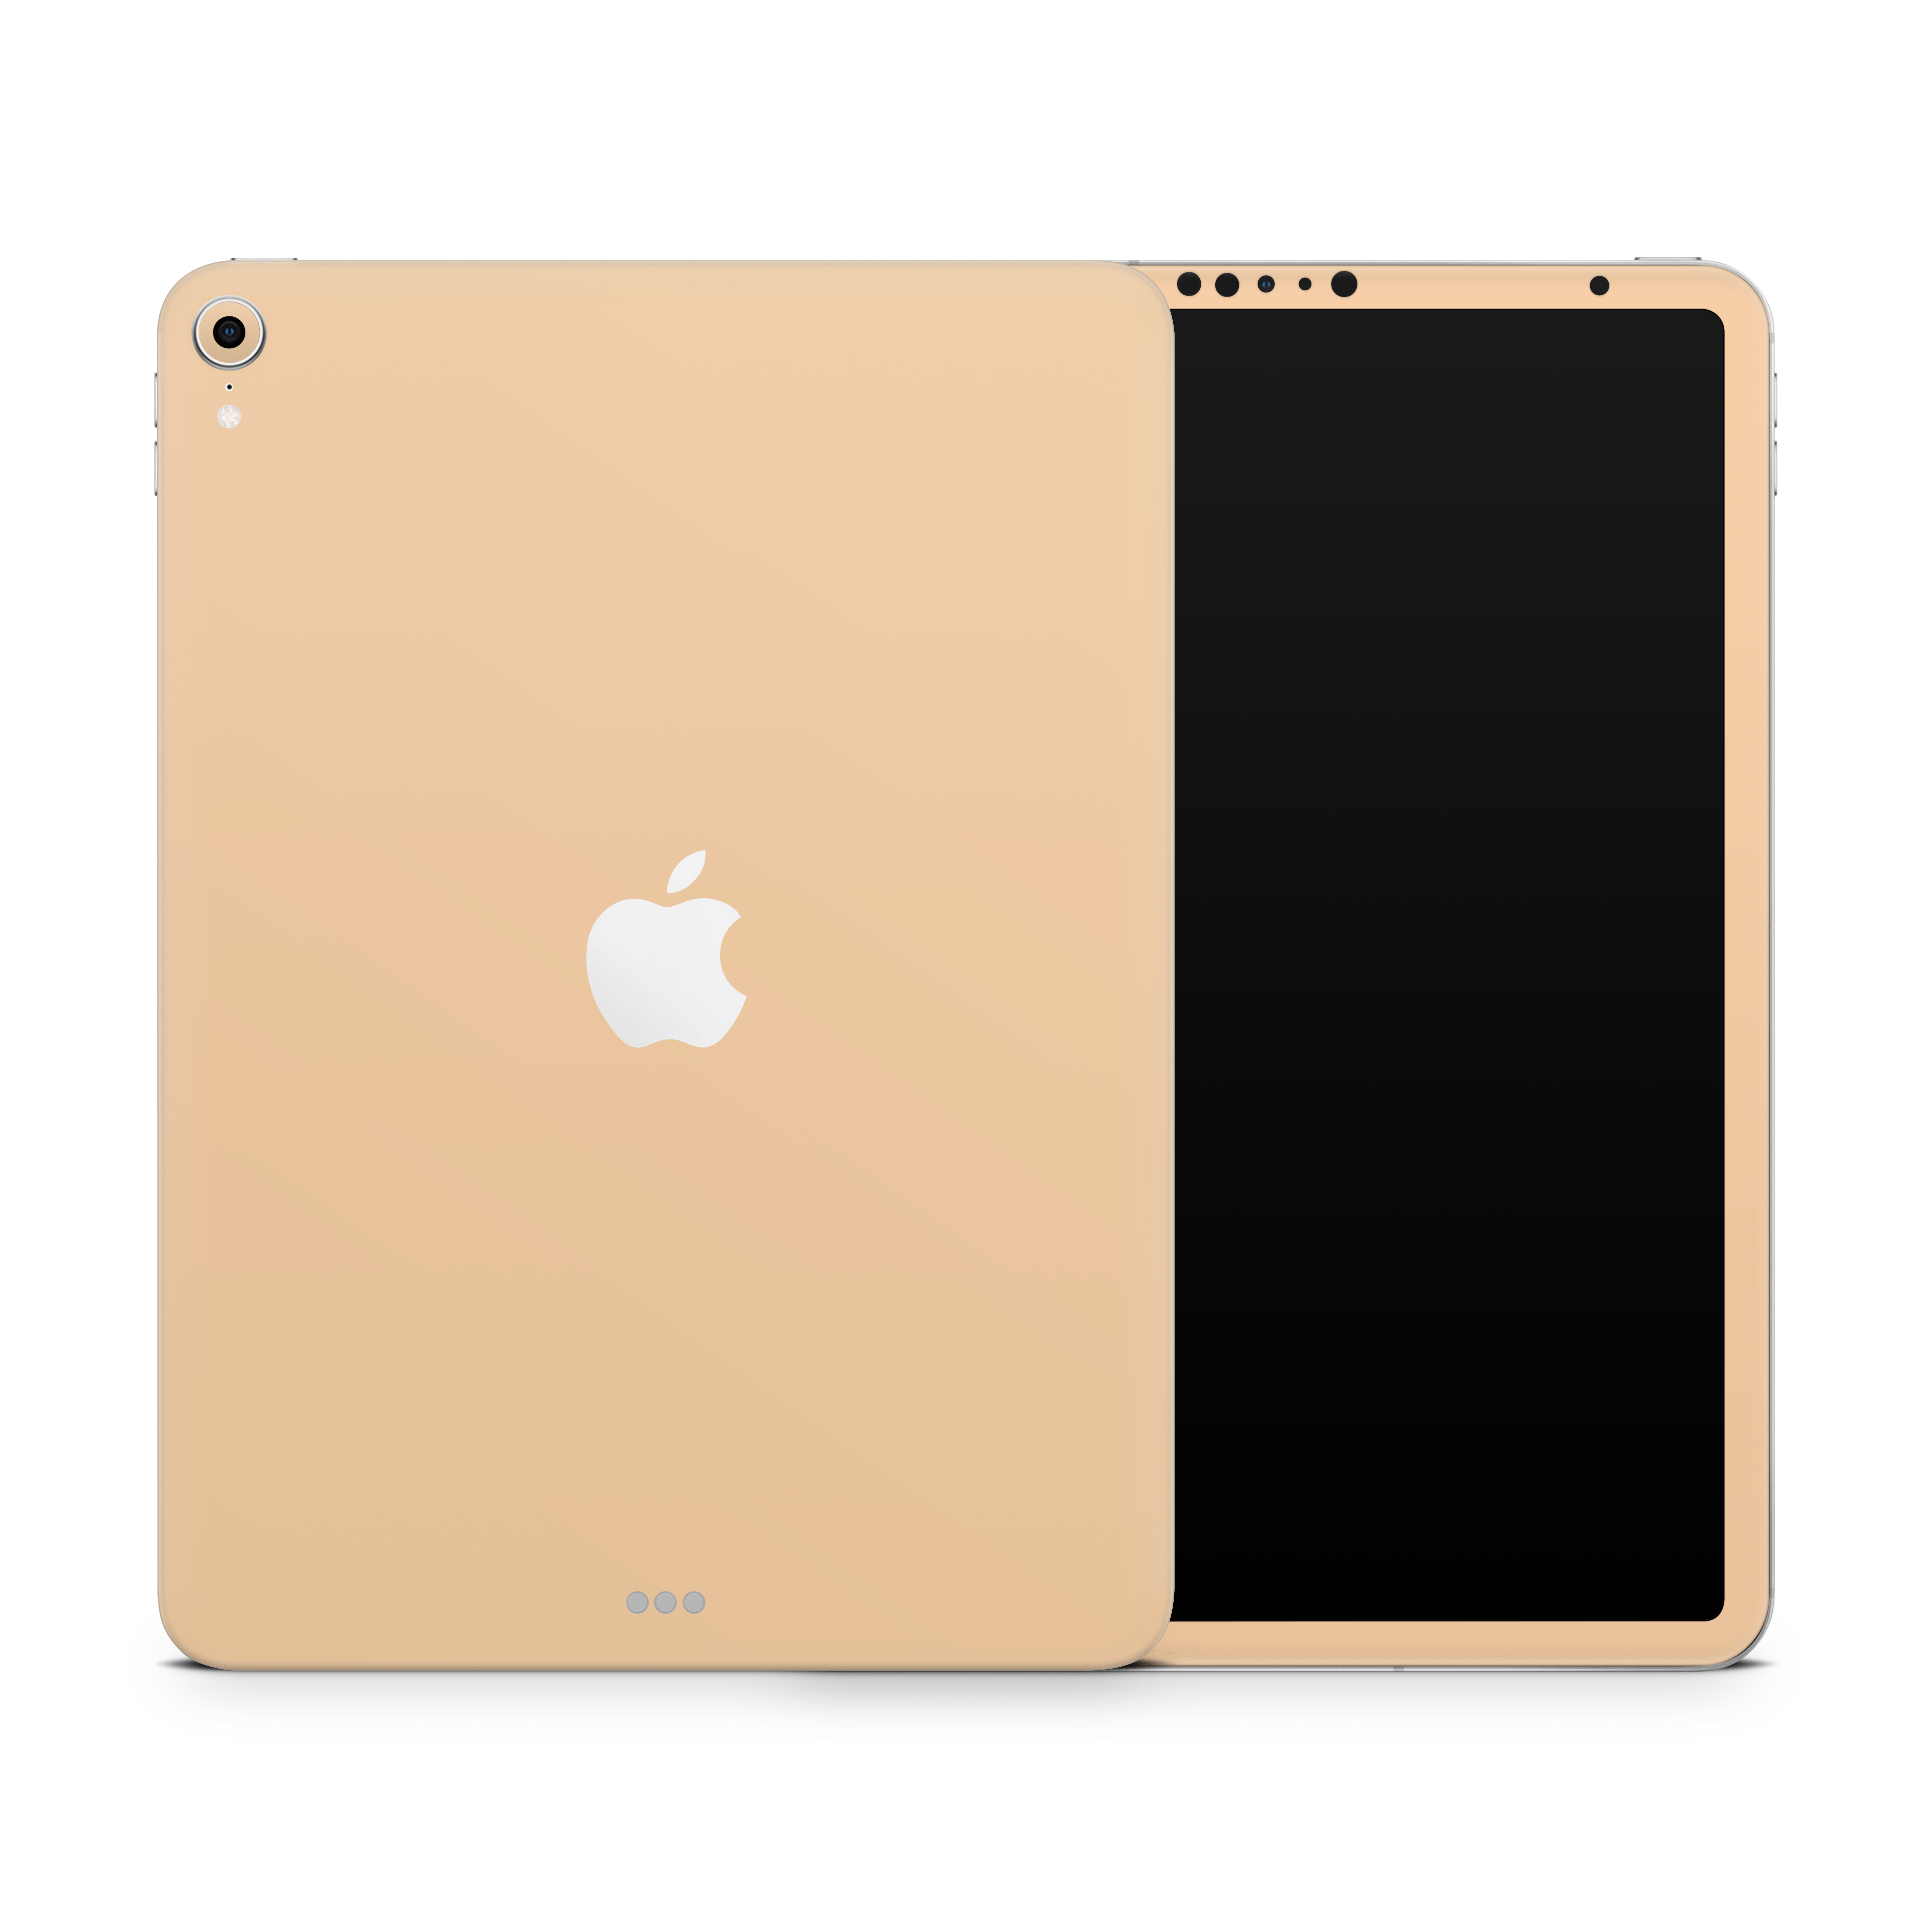 Creme Orange Apple iPad Pro Skin